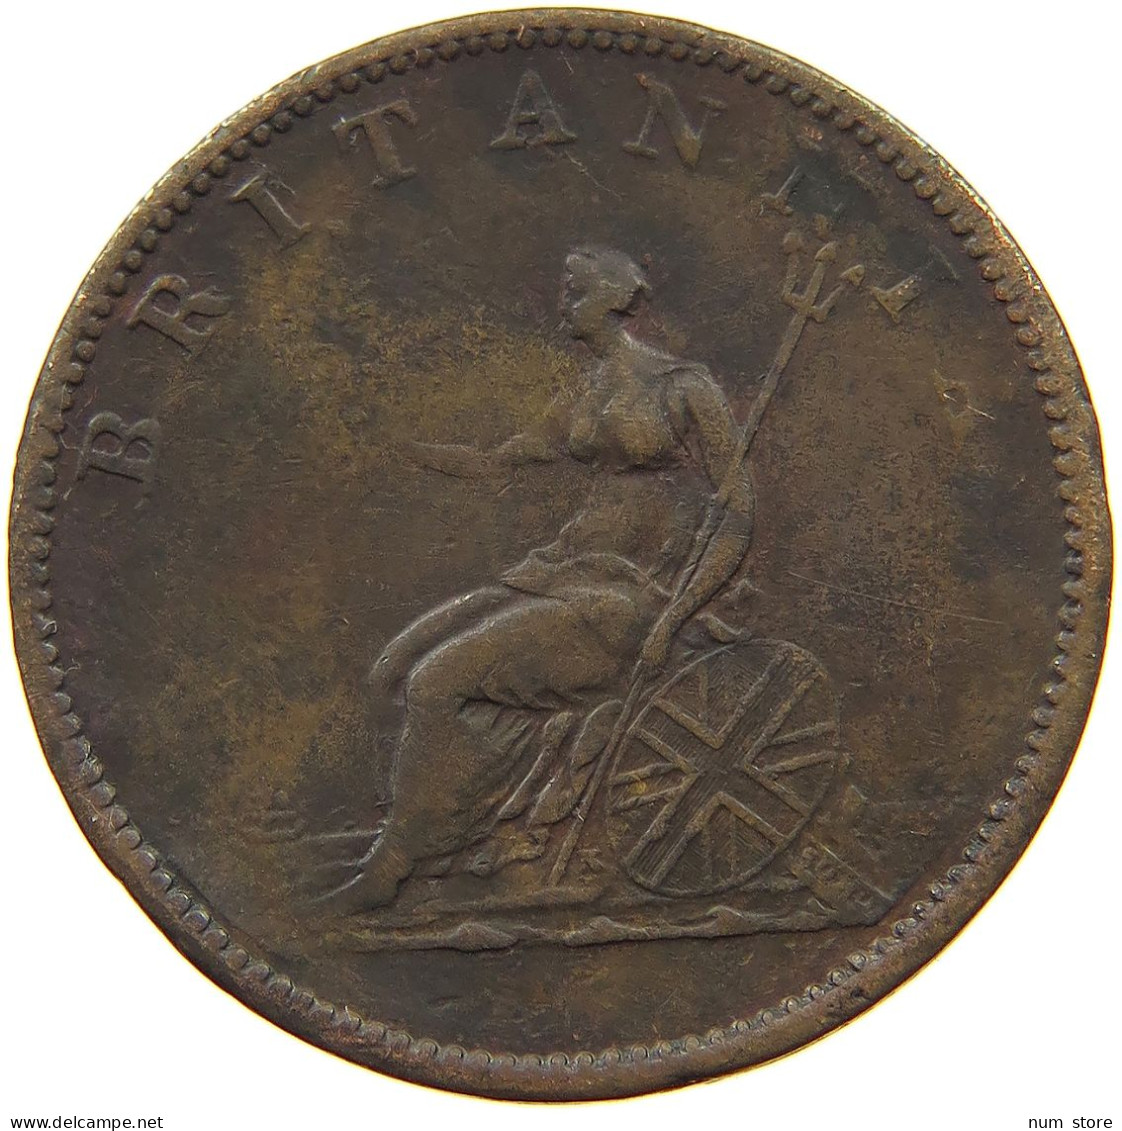 GREAT BRITAIN HALFPENNY 1806 GEORGE III. 1760-1820 #a008 0161 - B. 1/2 Penny